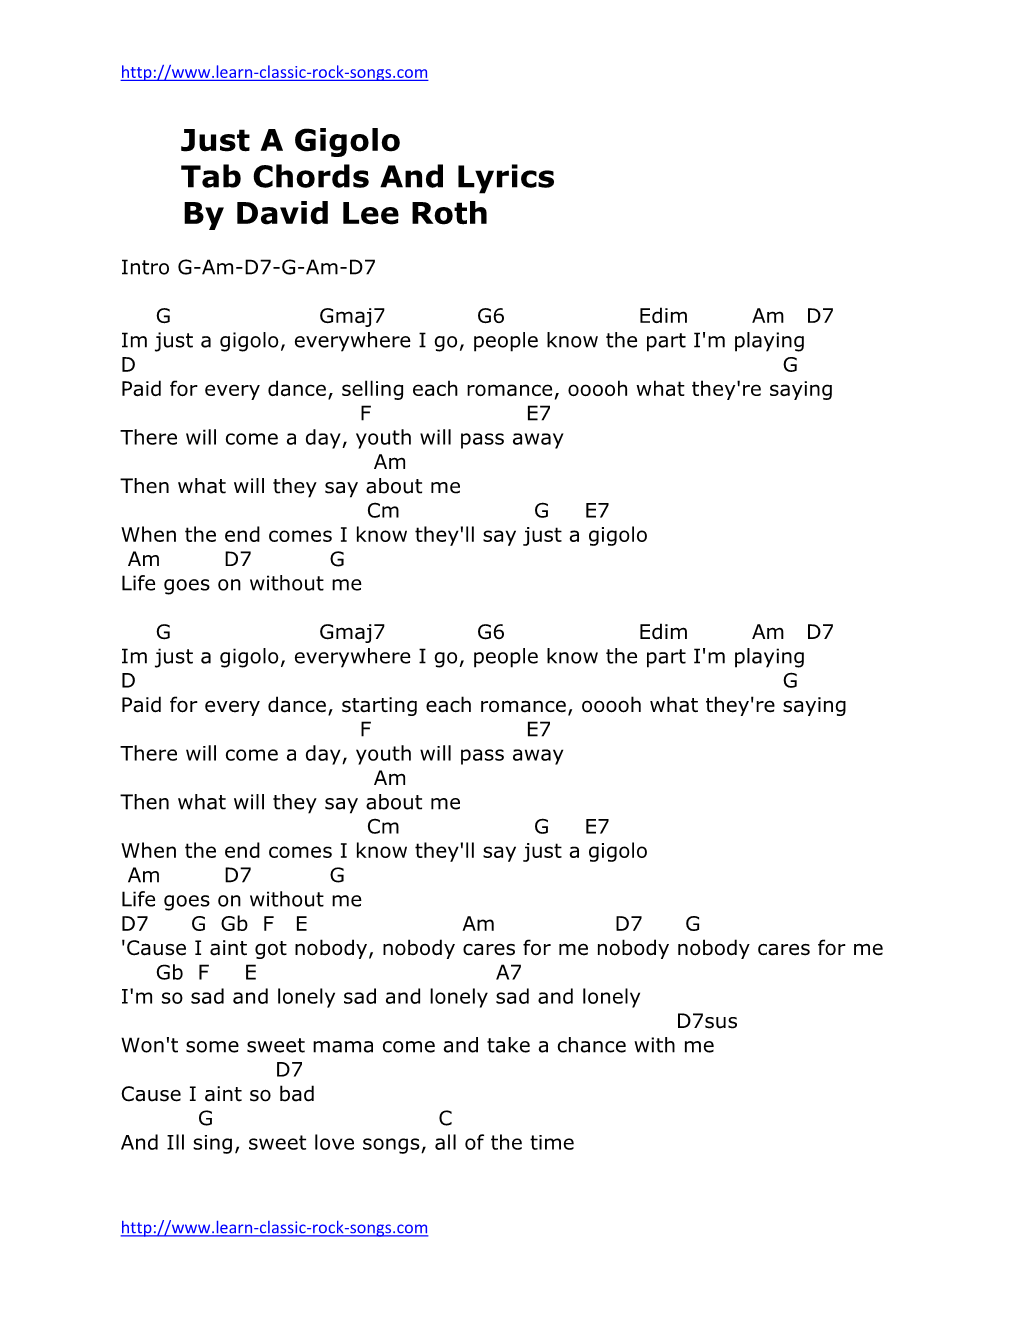 Just a Gigolo Tab Chords and Lyrics by David Lee Roth